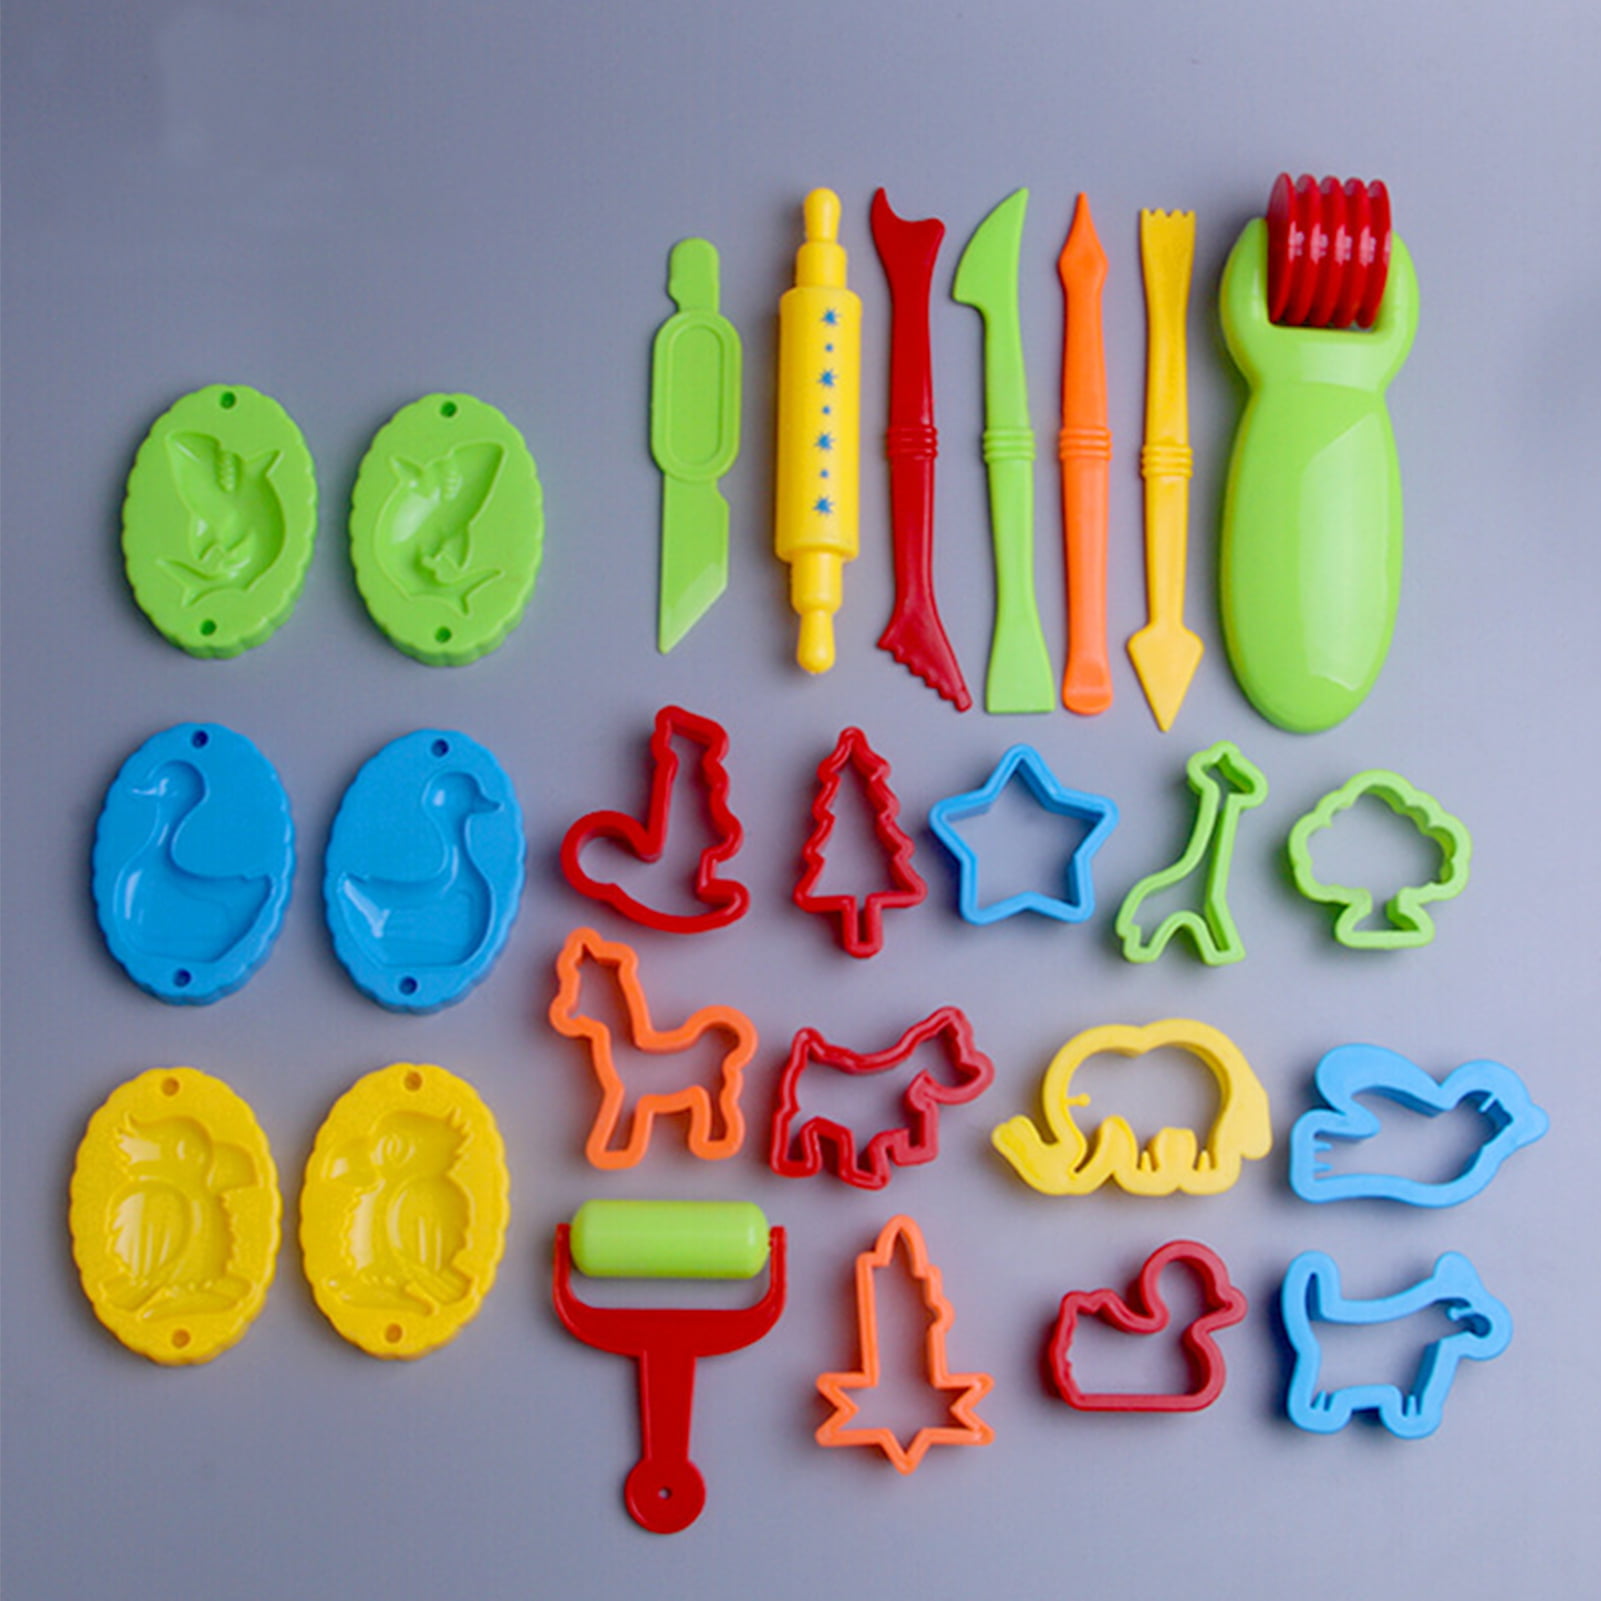 Vistreck 26 Pieces Play Dough Tools Playdough Accessories Set